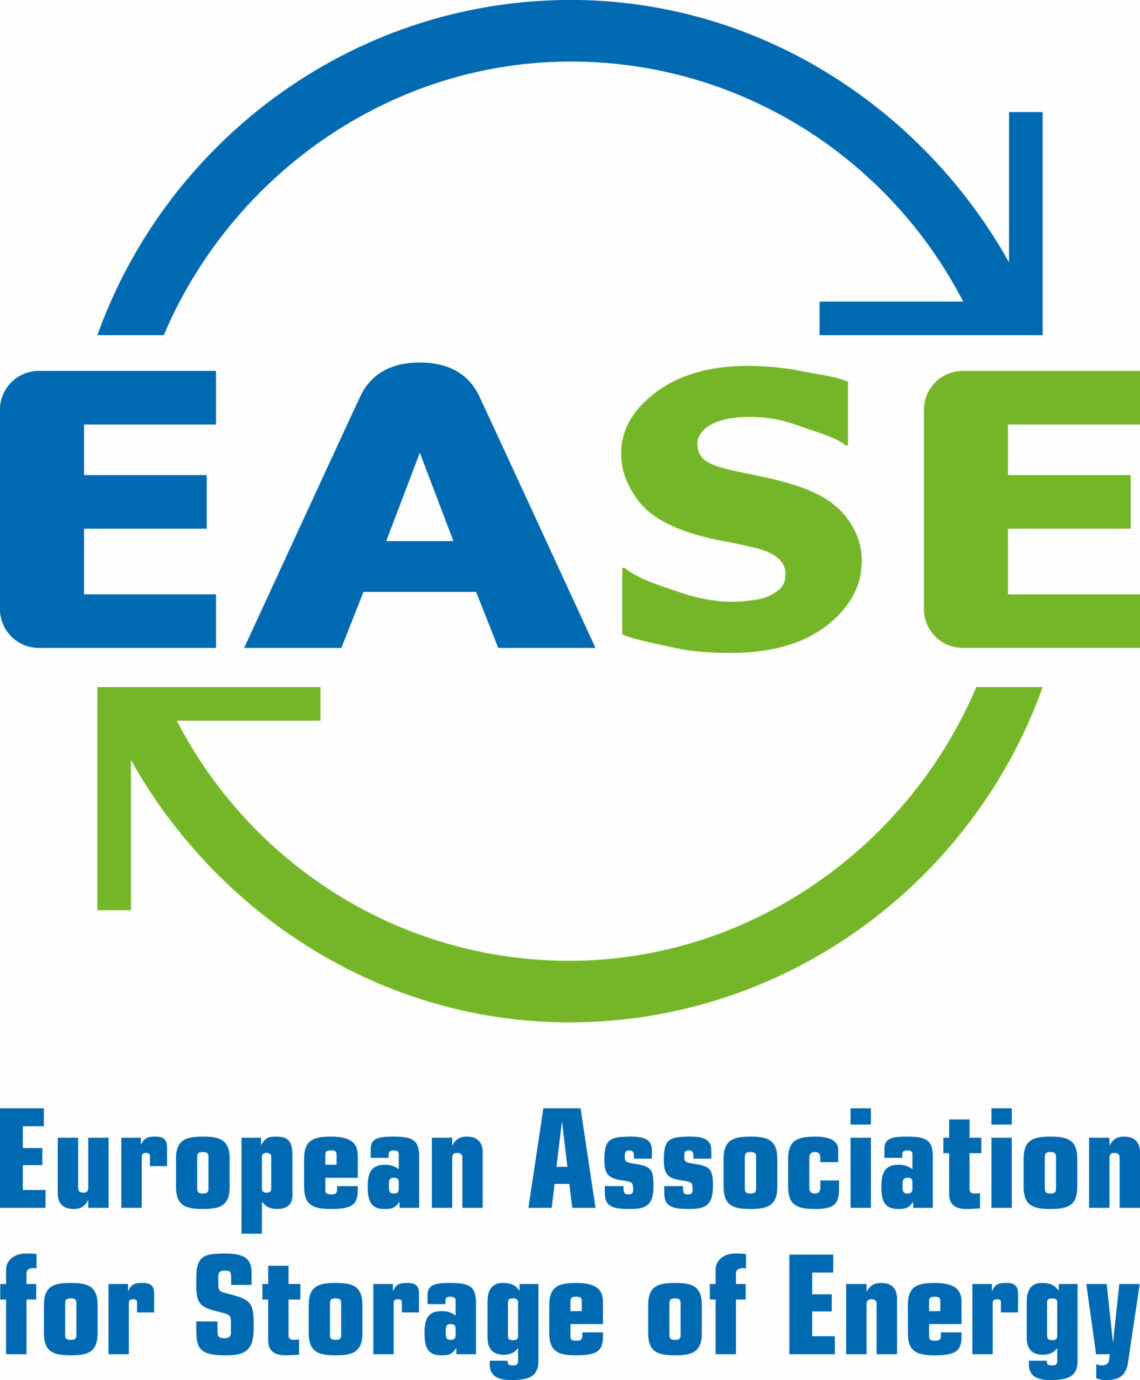 The European Association for Storage of Energy logo